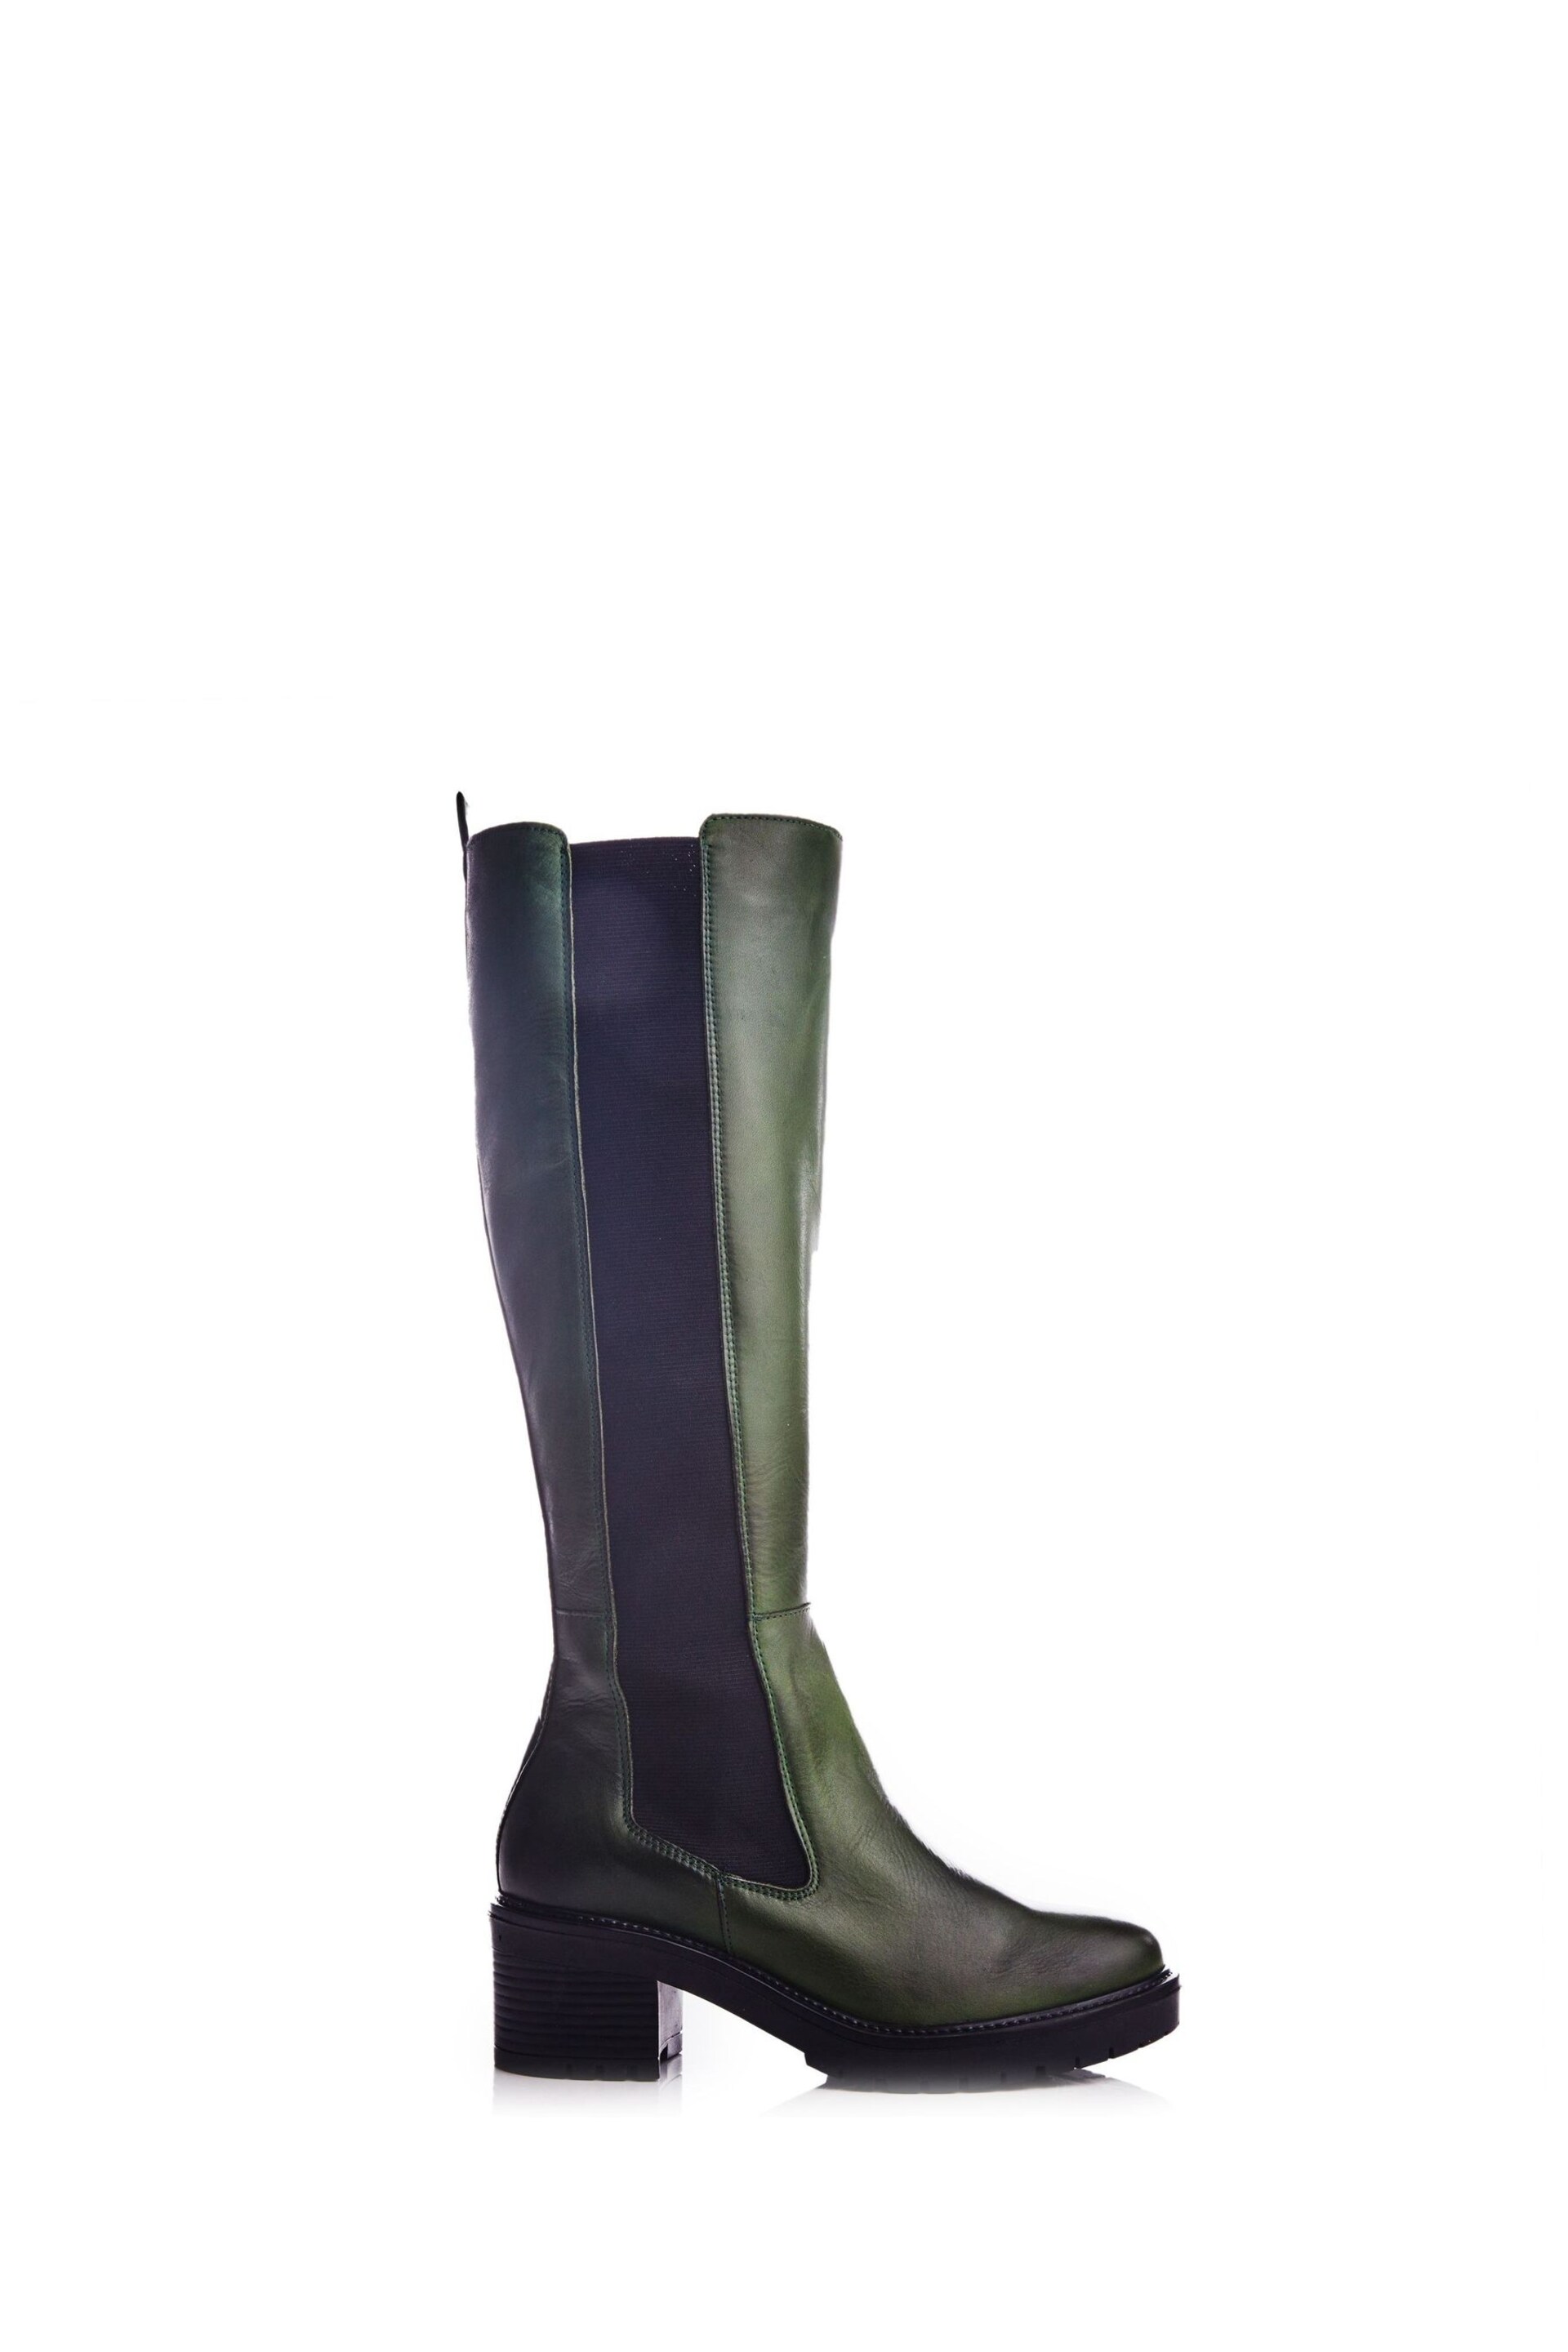 Moda in Pelle Linettie Long Chelsea Block Heel Boots - Image 1 of 3